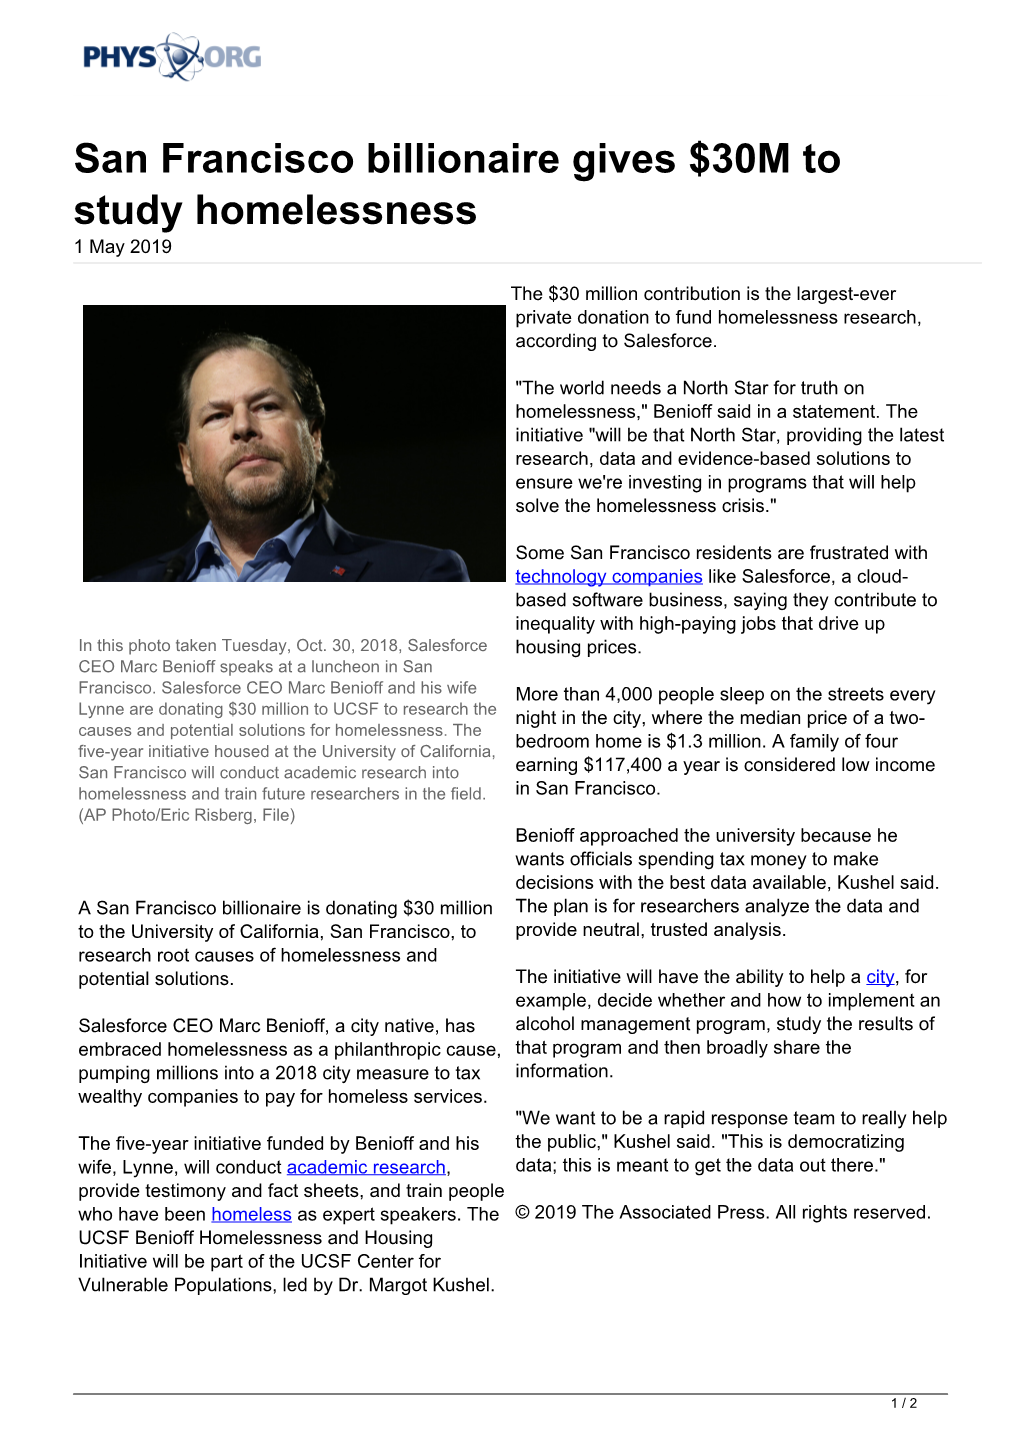 San Francisco Billionaire Gives $30M to Study Homelessness 1 May 2019